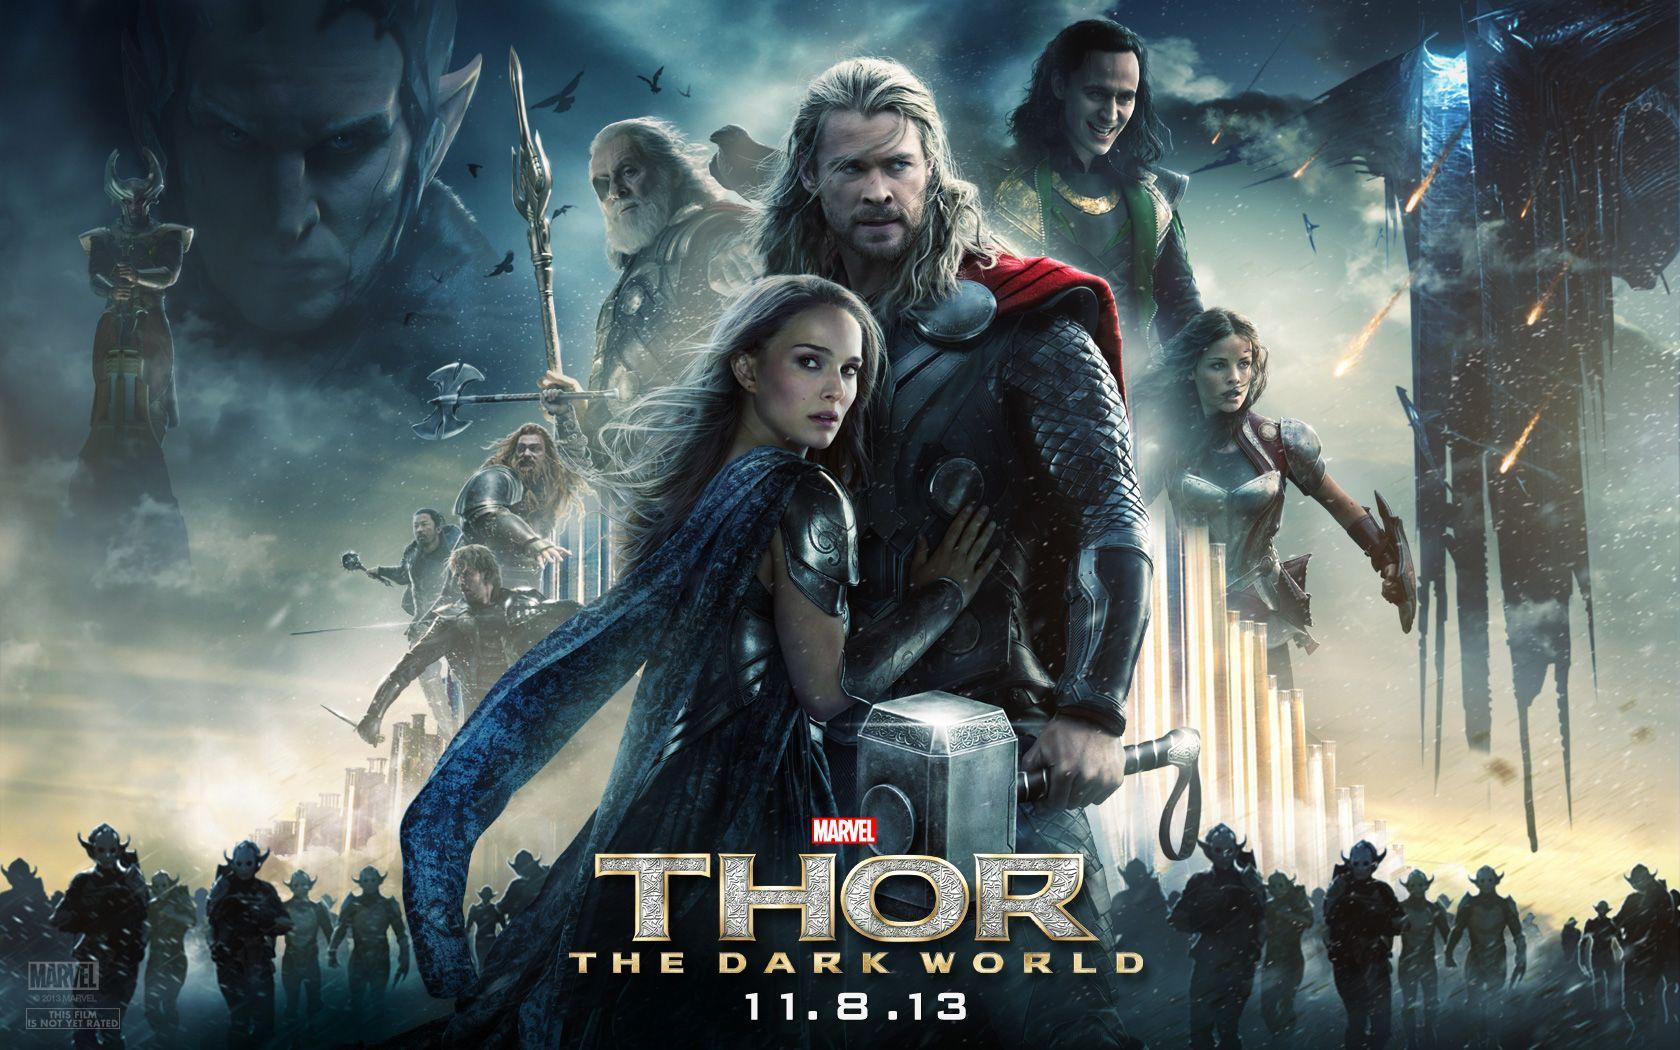 Movies Thor 2 The Dark World 2013 wallpaper Desktop, Phone, Tablet